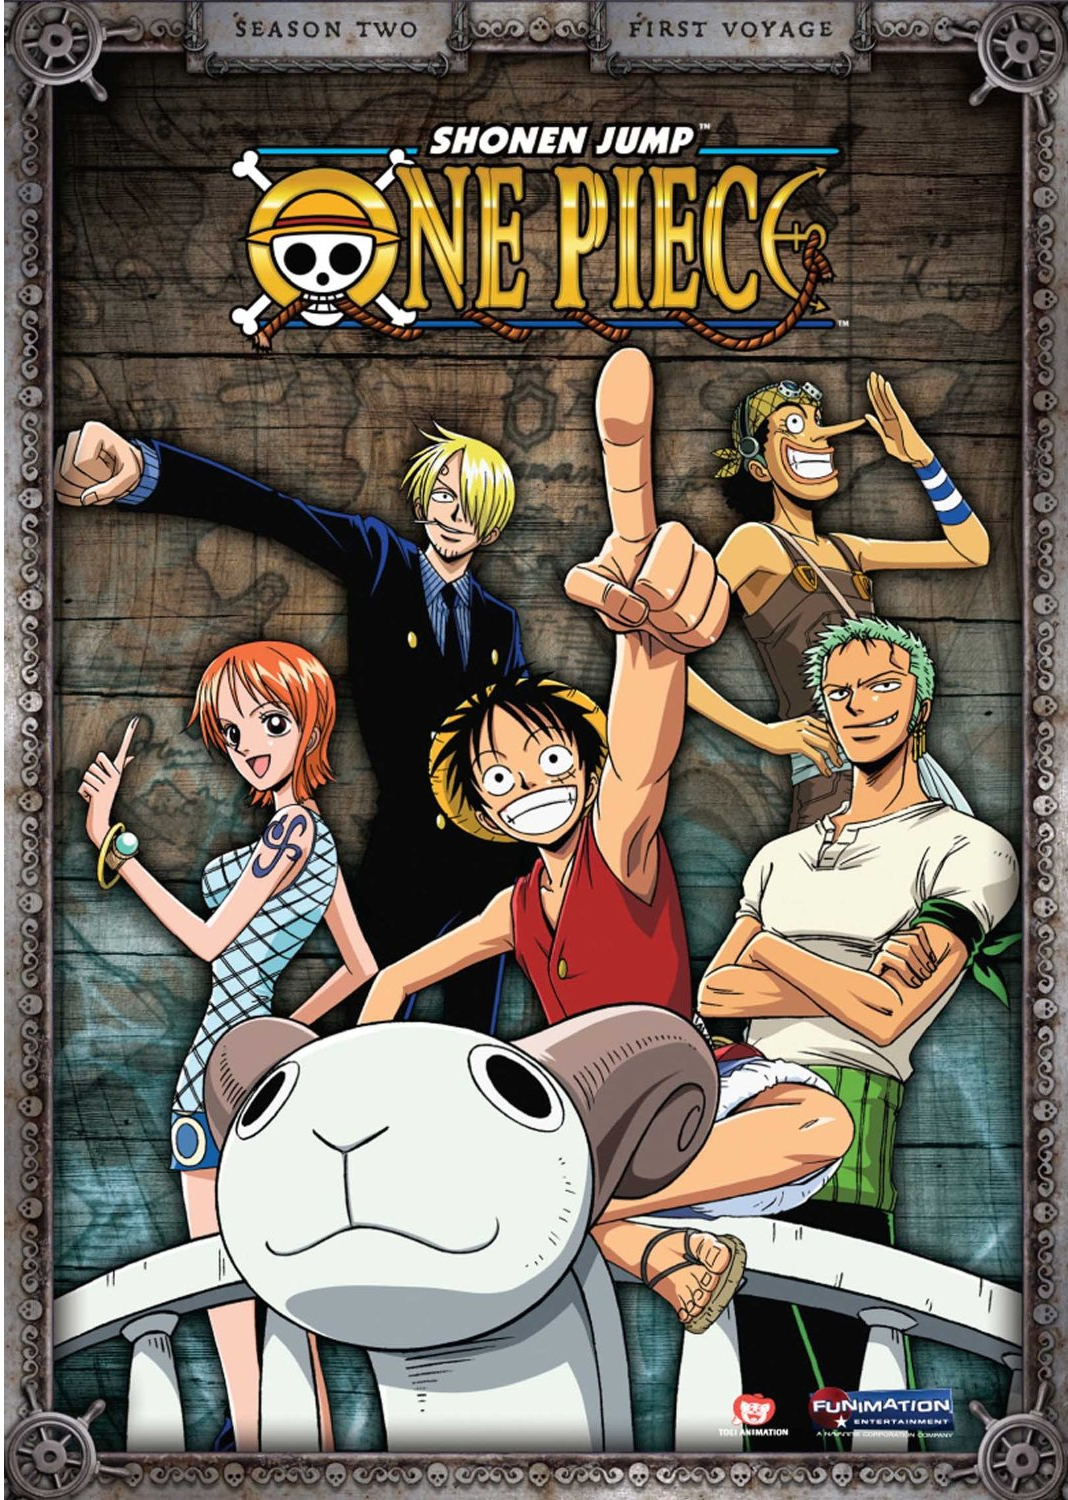 One Piece (season 3) - Wikipedia